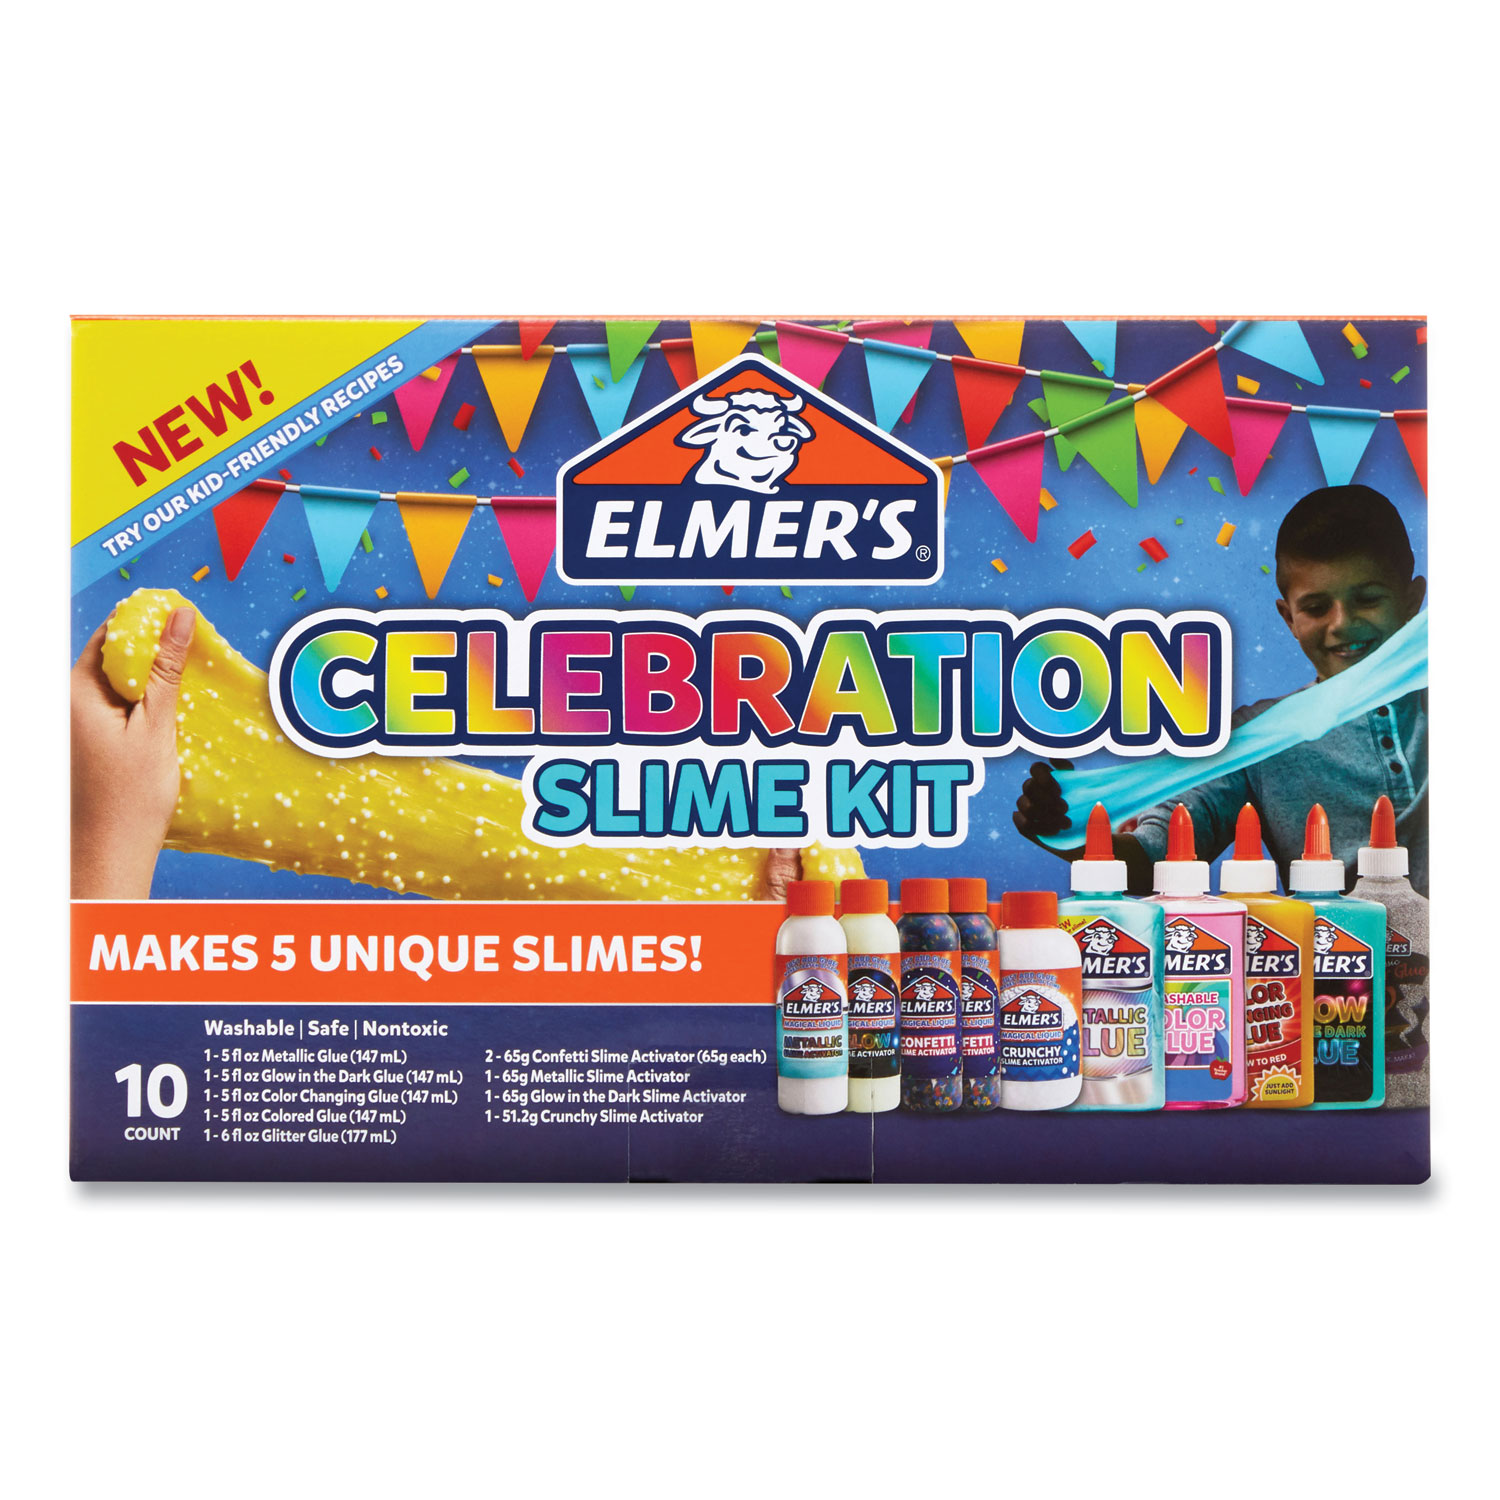  Elmer's Glow in the Dark Slime Kit : Learning: Supplies